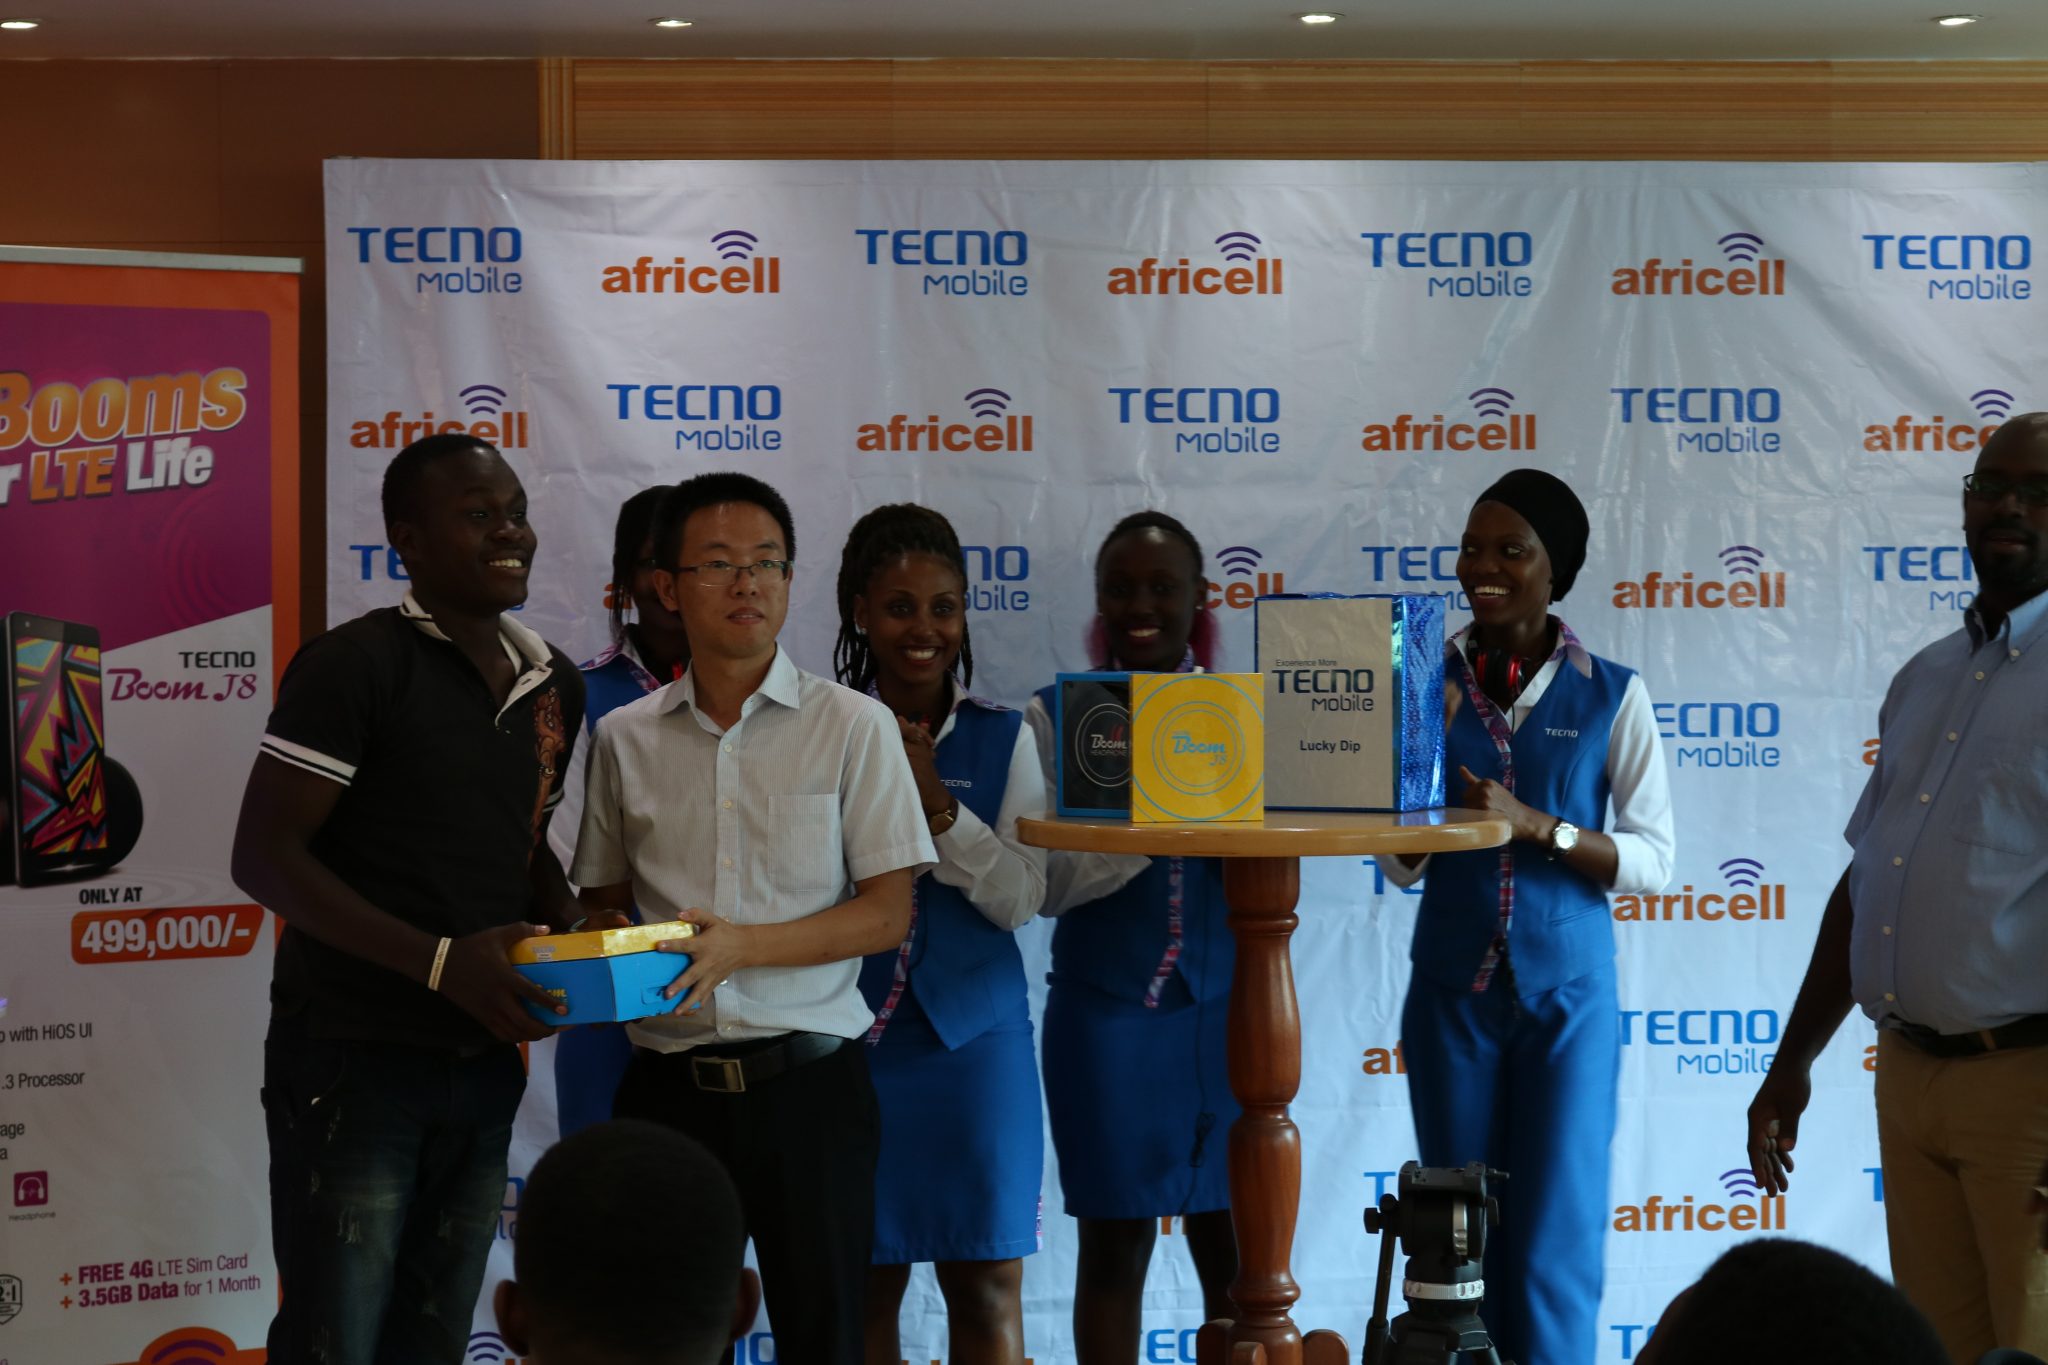 Pius Enywaru from TechJaja receives his free Tecno J8 phone from Hong Ji the Tecno Mobile Operator Sales Manager